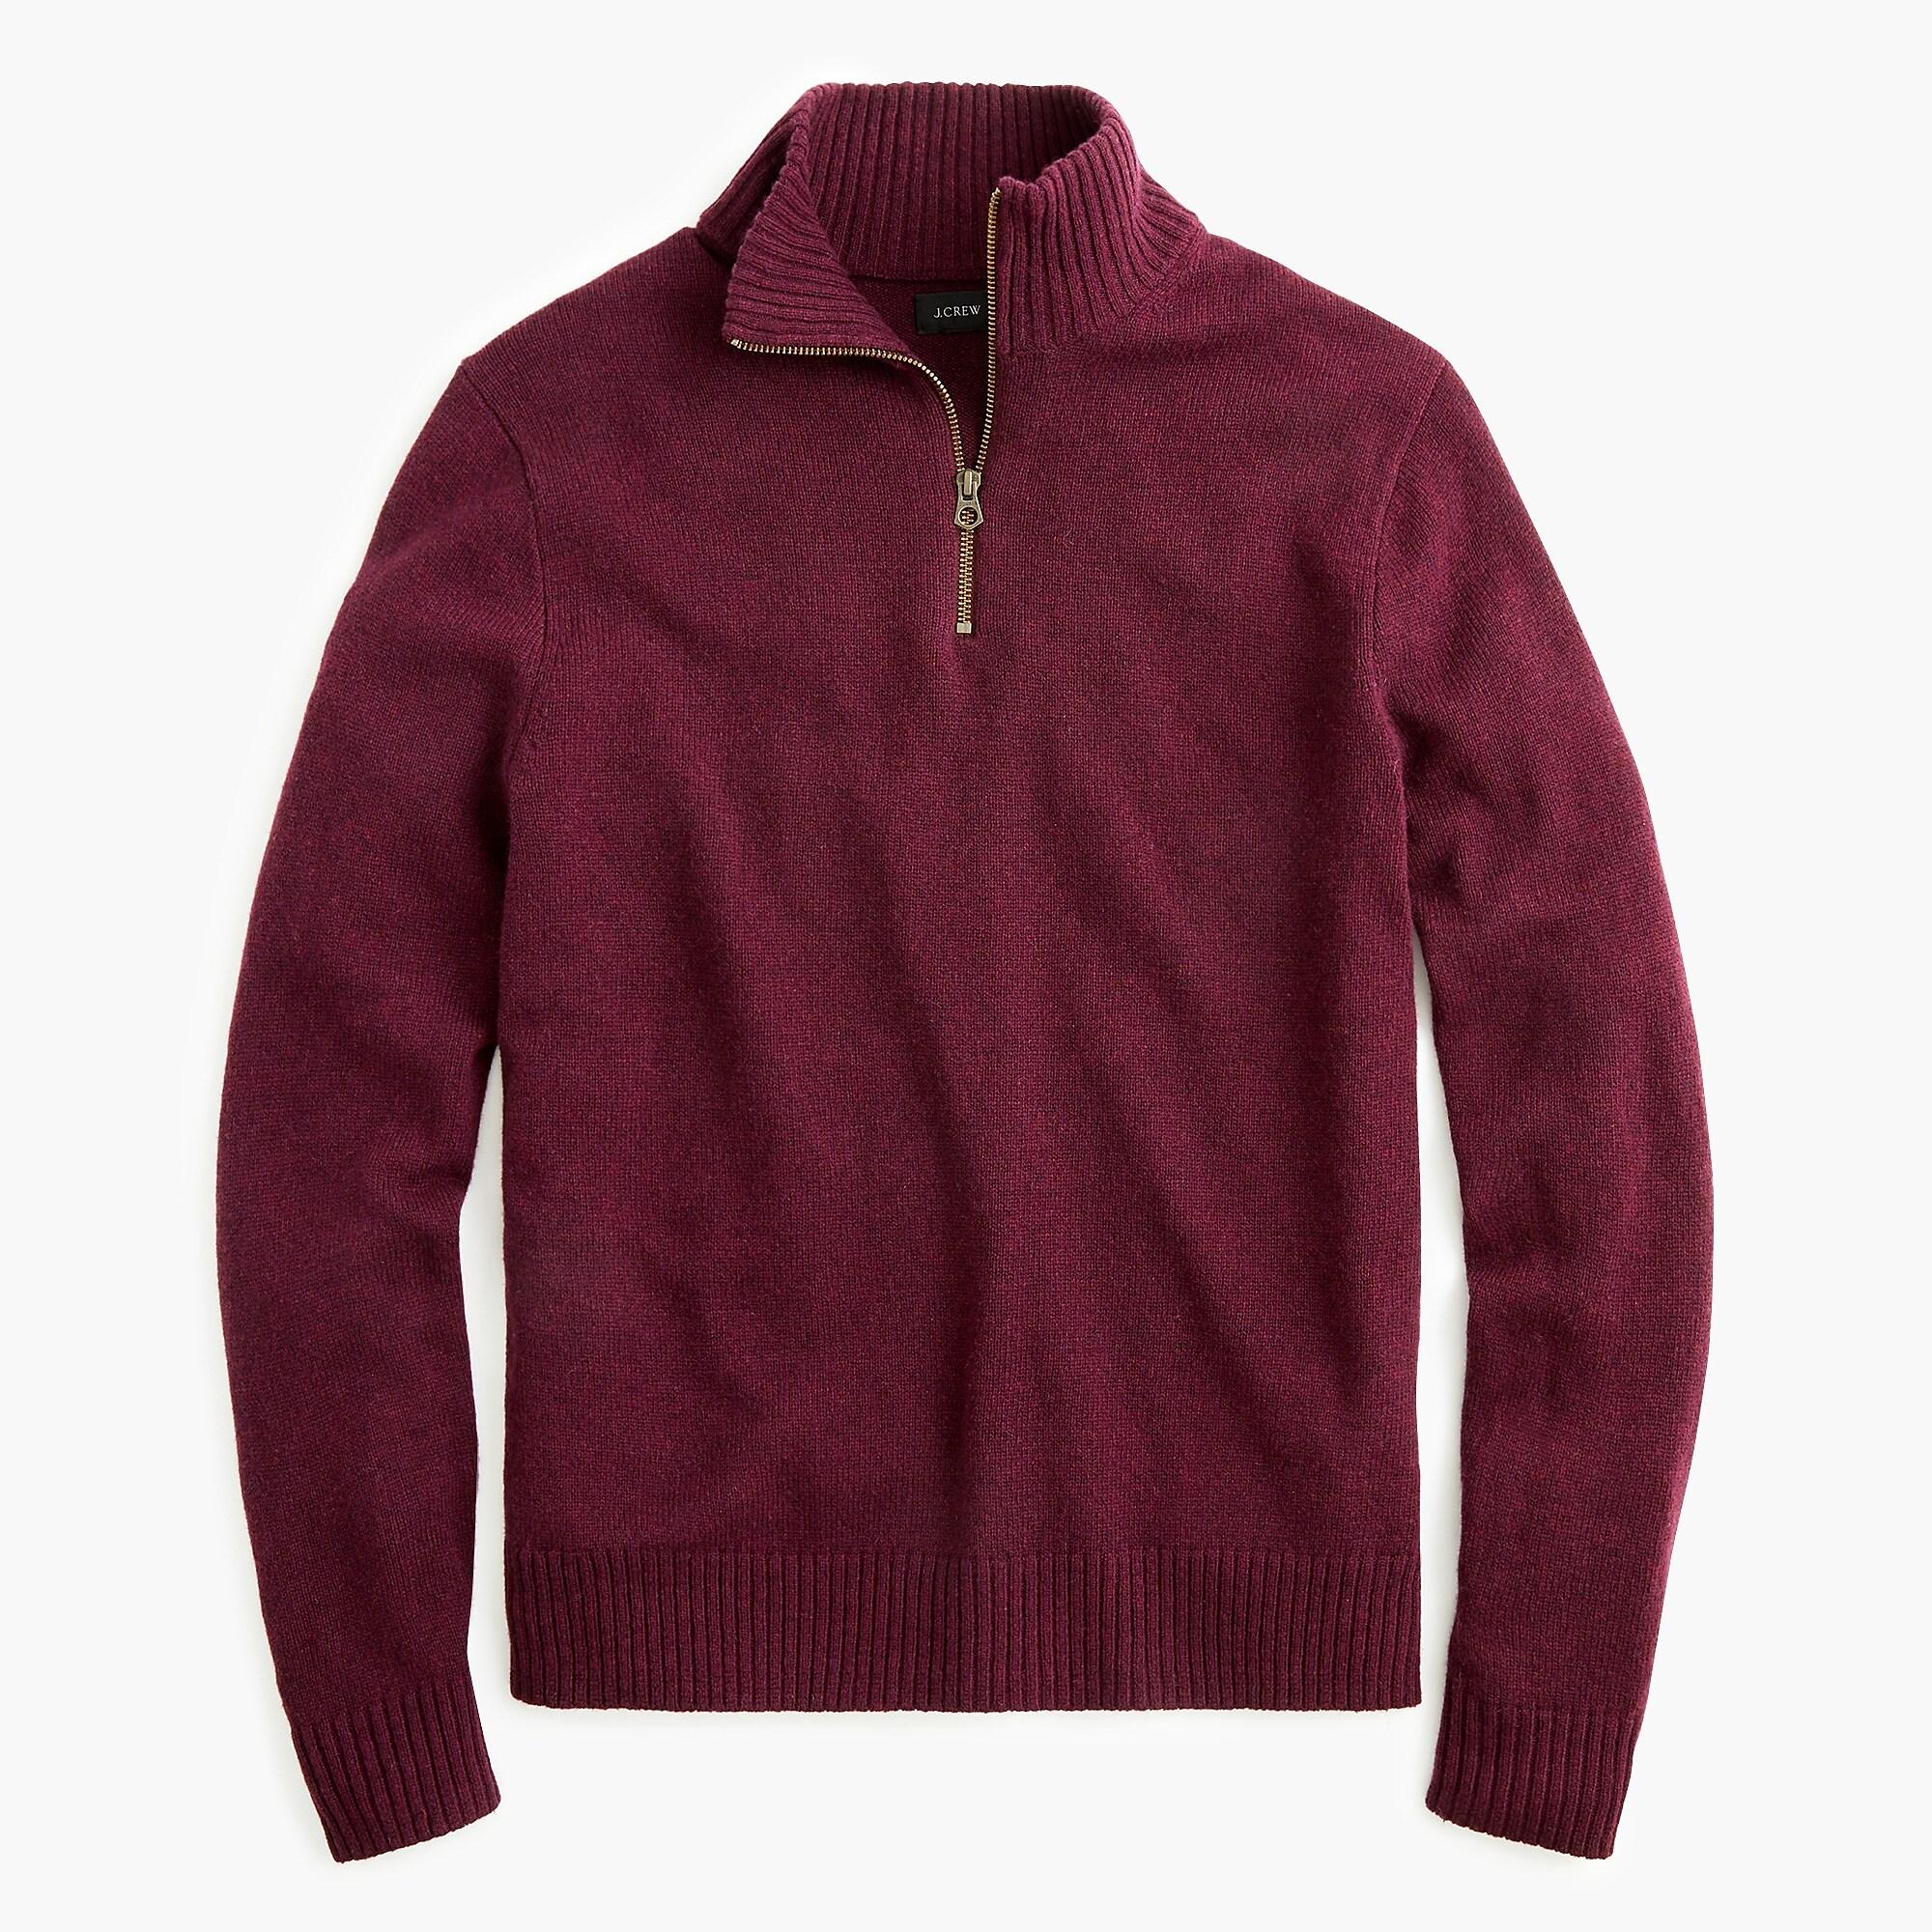 J.Crew Rugged Merino Wool Half-zip Sweater in Red for Men - Lyst